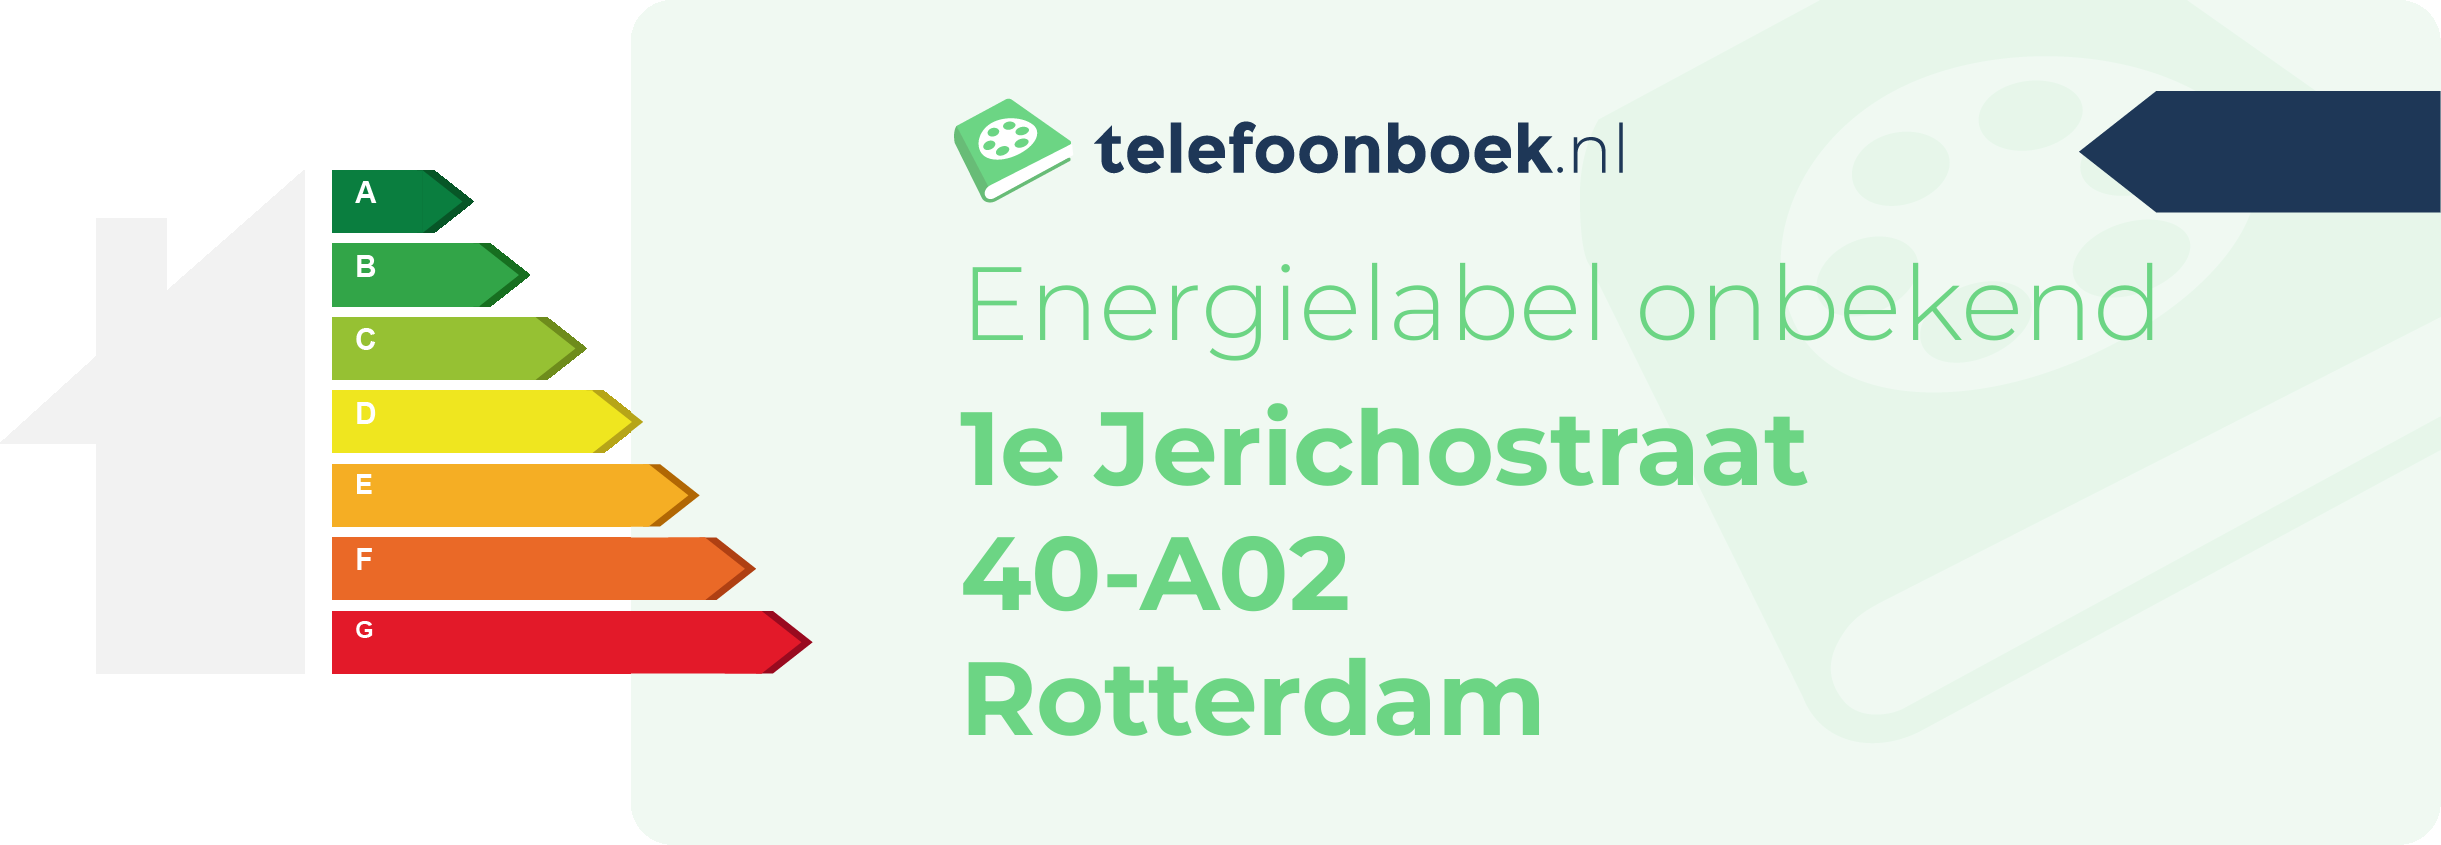 Energielabel 1e Jerichostraat 40-A02 Rotterdam